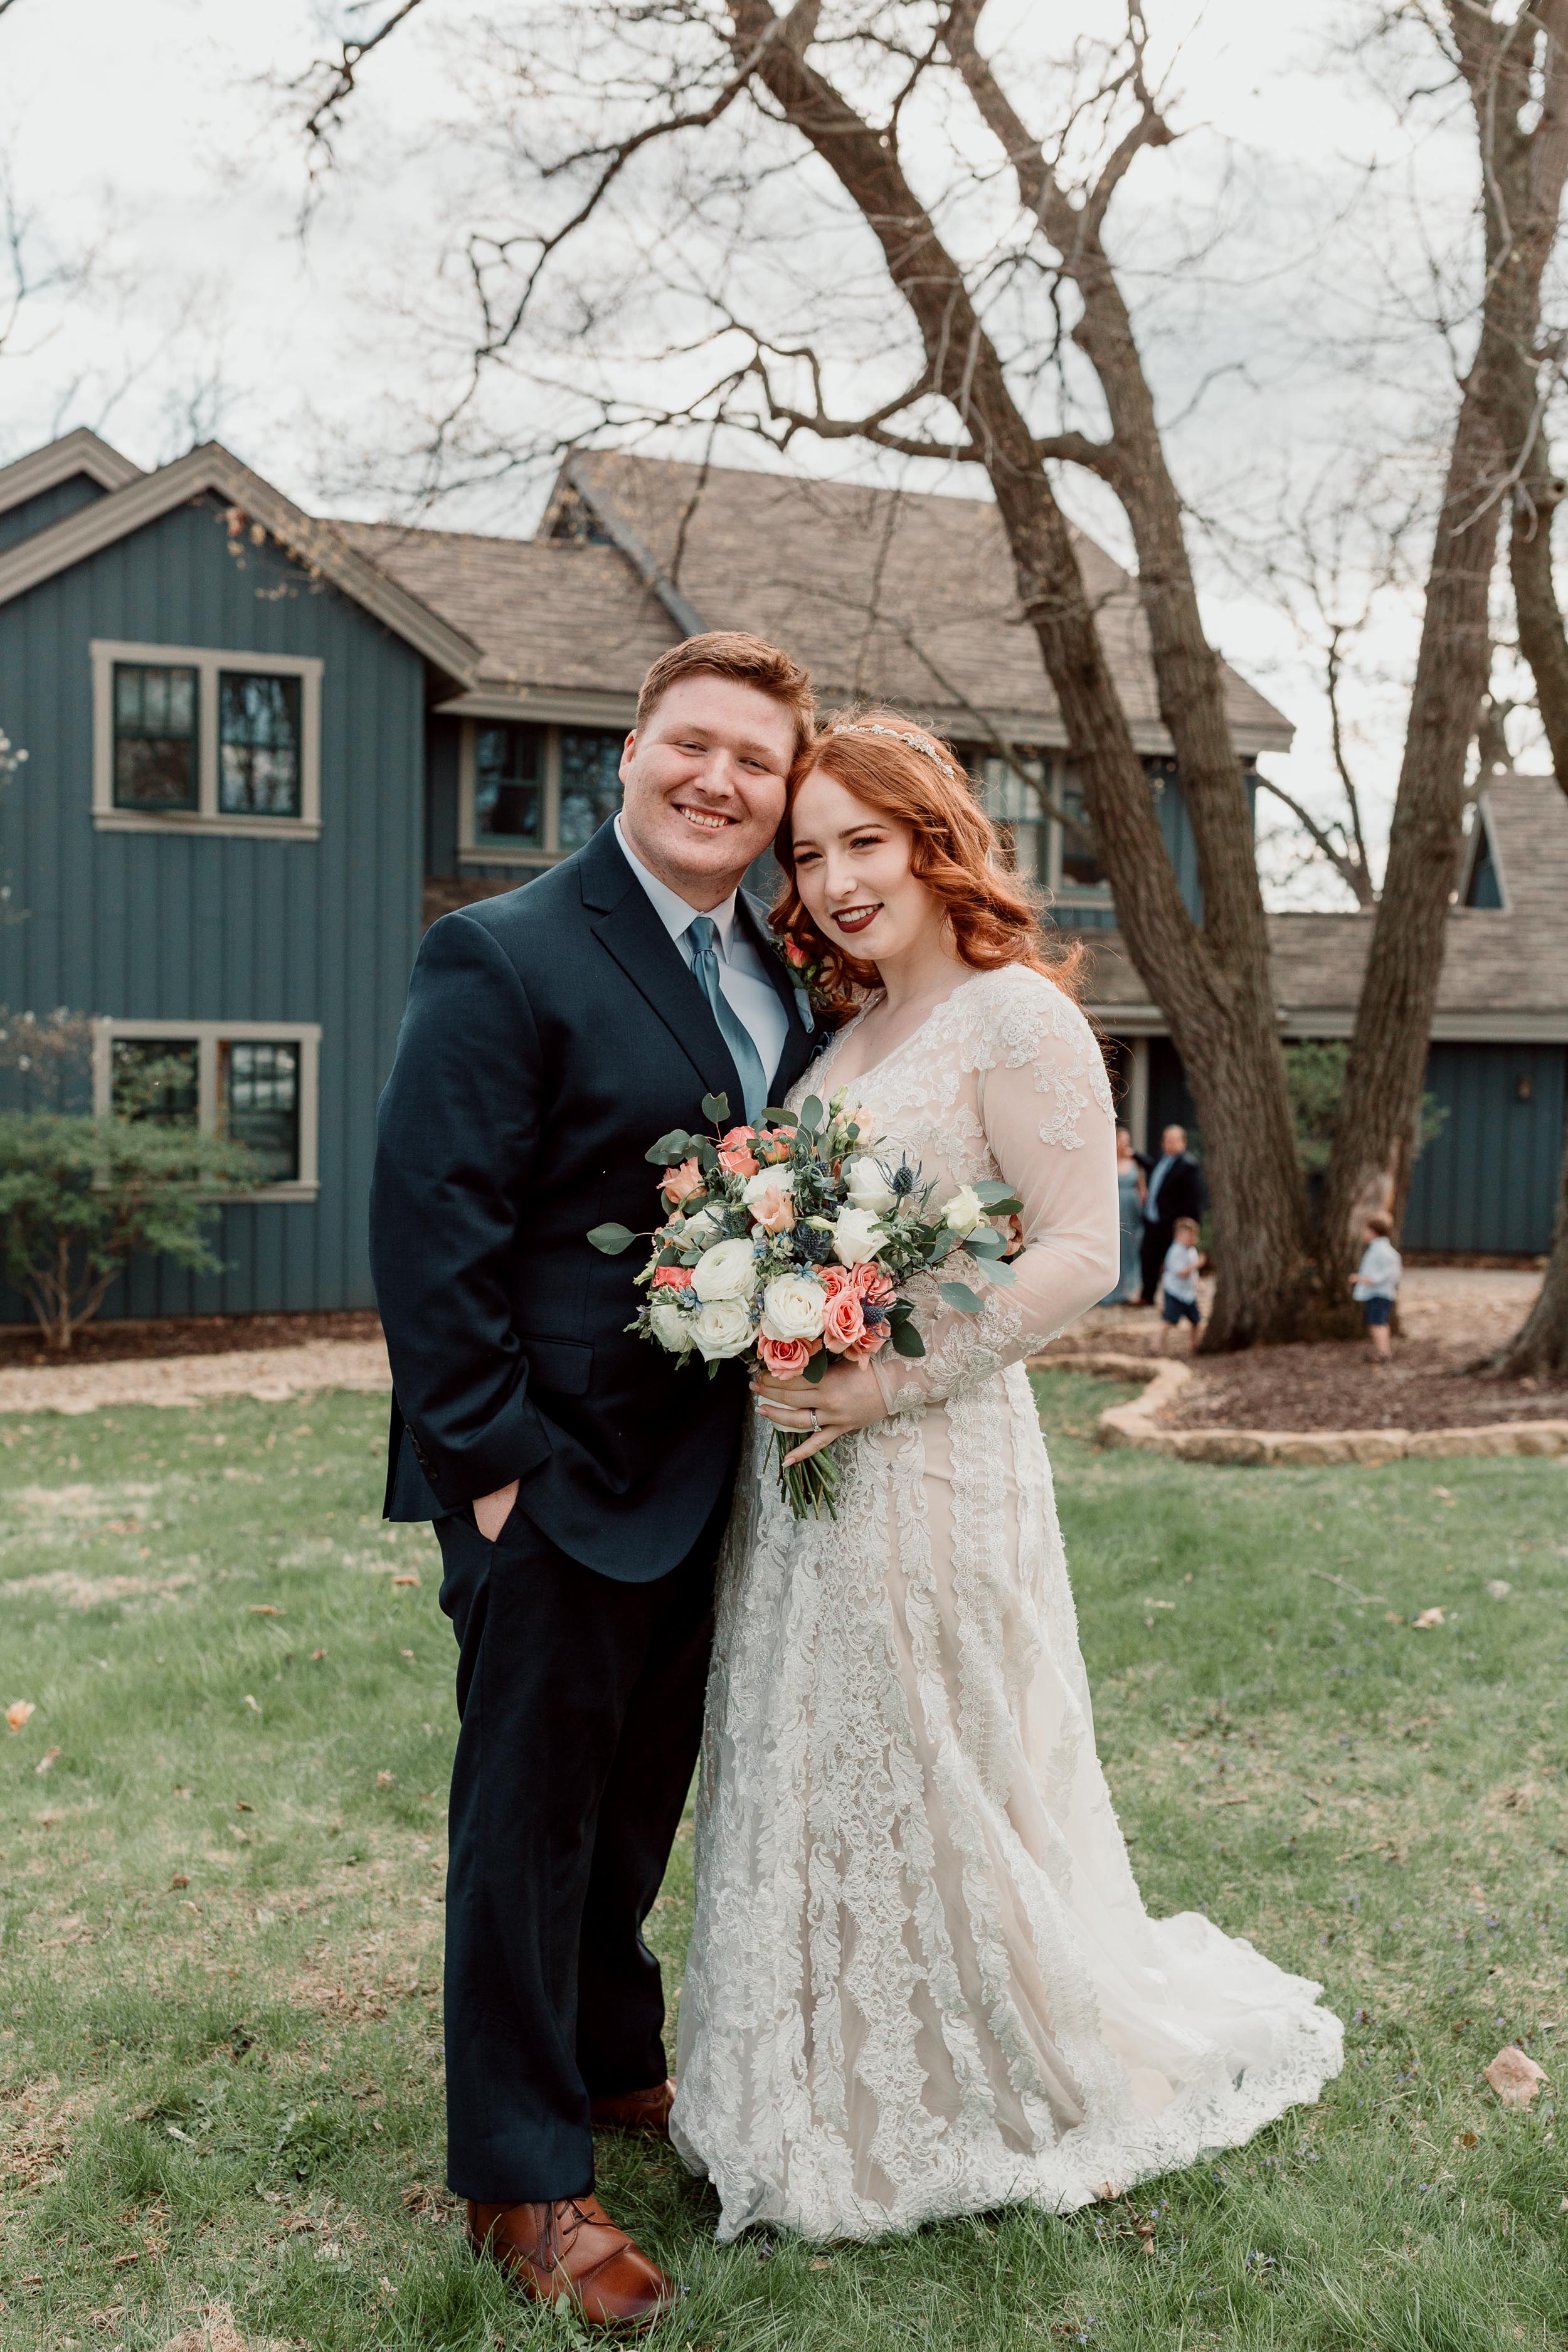 Airbnb resort wedding in Galena | Galena Illinois Airbnb Wedding | Wedding Photographer | Eagle Ridge Galena Wedding | Outdoor Wedding Inspiration | Small Intimate Elopement Wedding